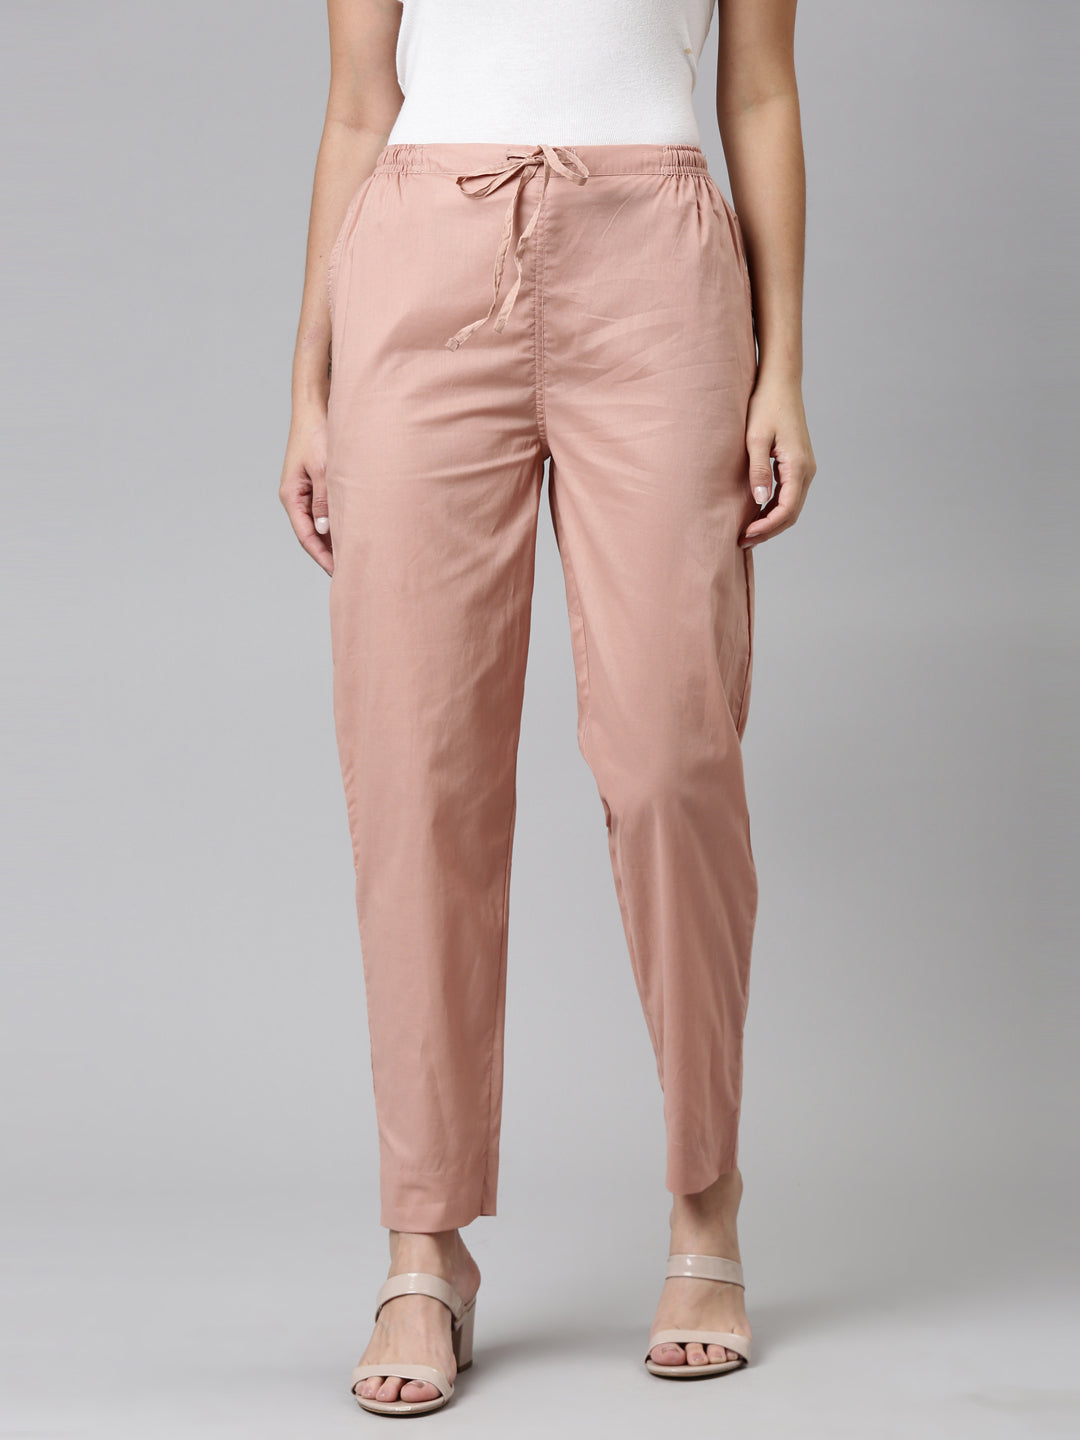 Women Solid Dusty Pink Comfort Fit Cotton Pants